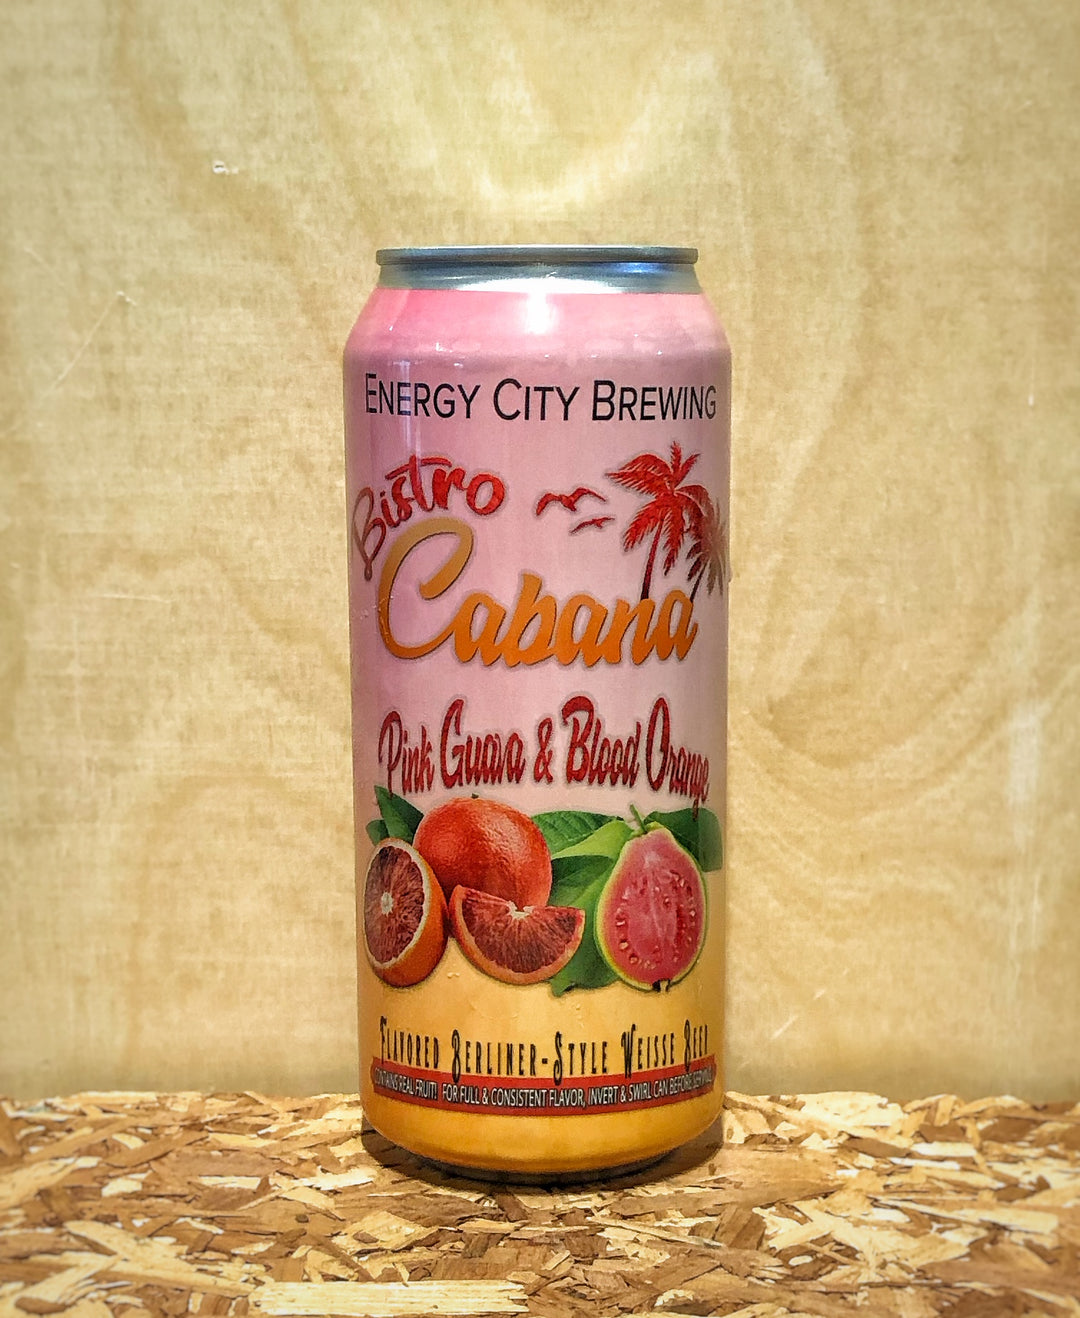 Energy City Brewing Bistro Cabana Pink Guava & Blood Orange Berliner Weisse Style Beer (Waunakee, WI)